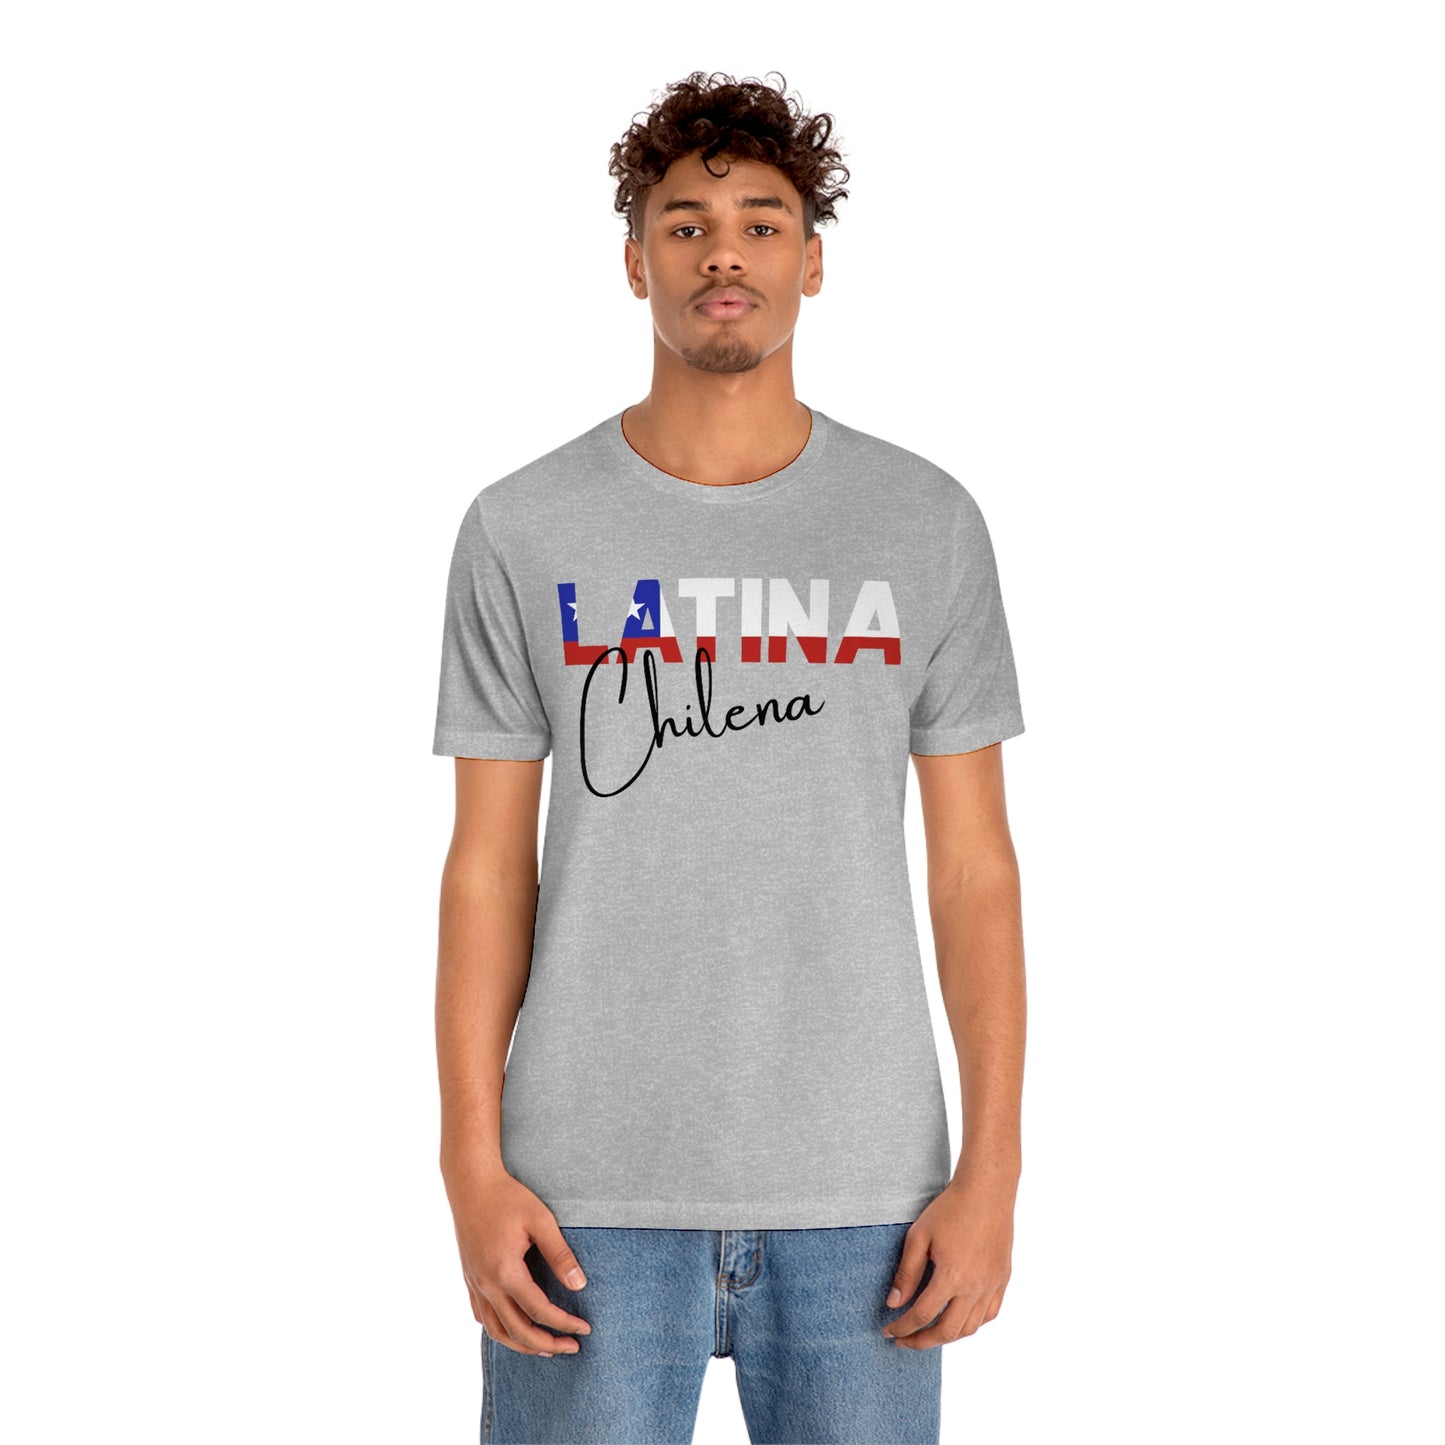 Latina Chilena, Shirts